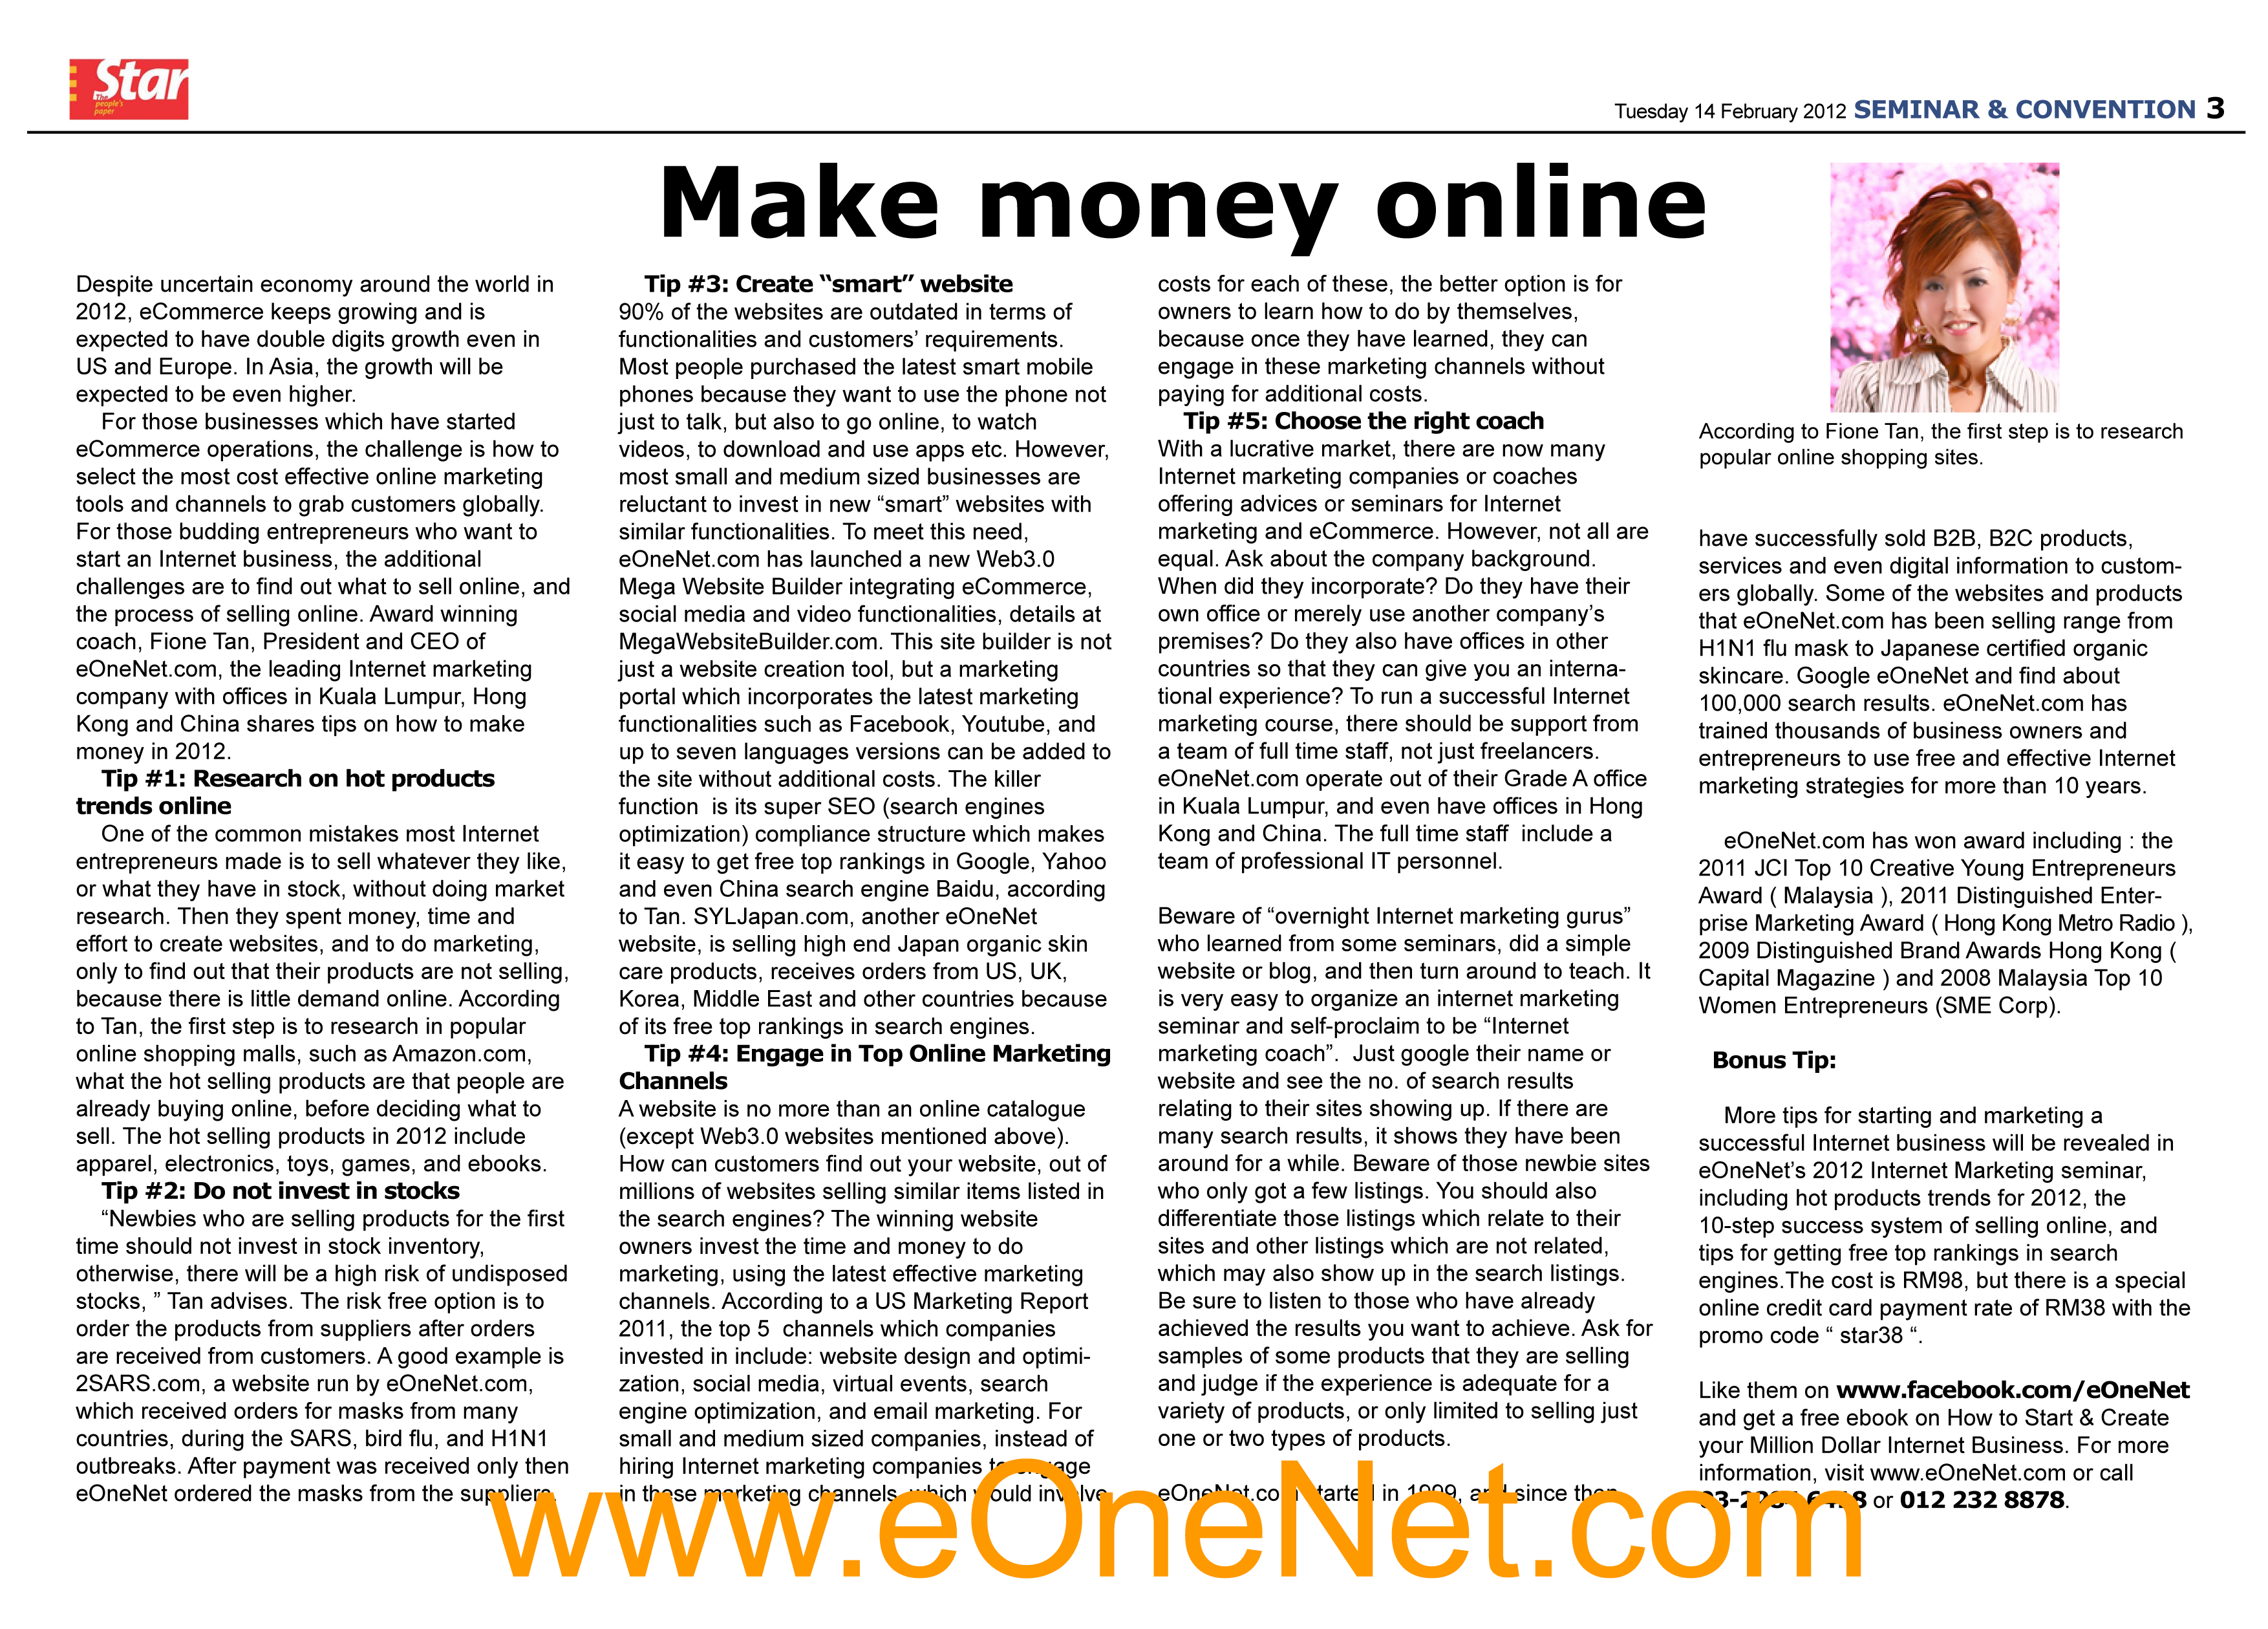 Make Money Online – The Star Malaysia